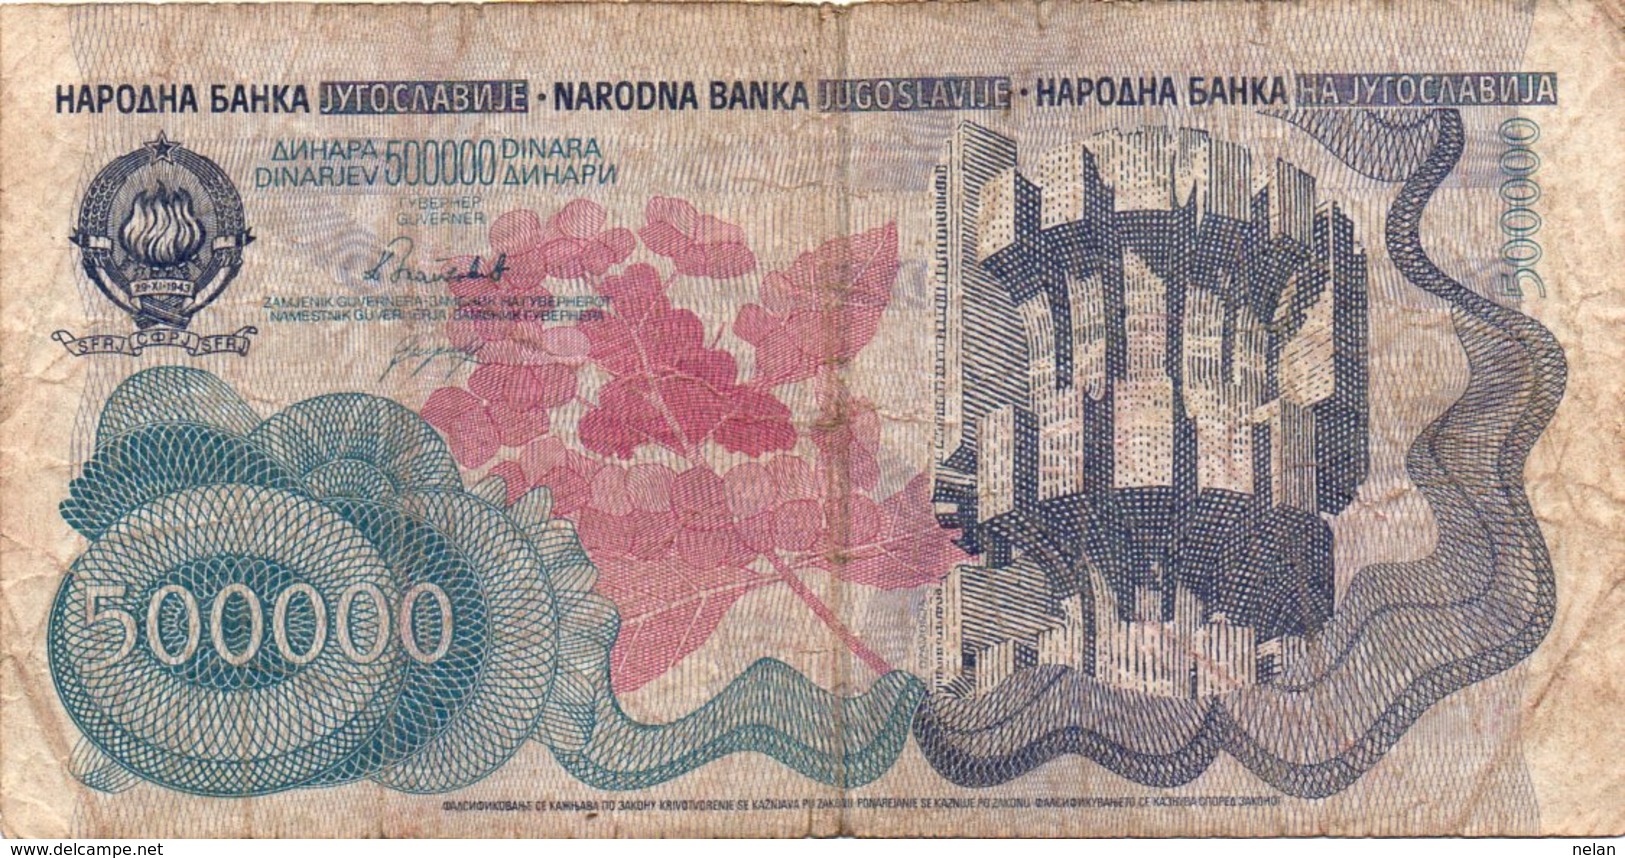 JUGOSLAVIA-500,000 Dinara "Spomenik Issue" 1989 P-98 - Jugoslavia